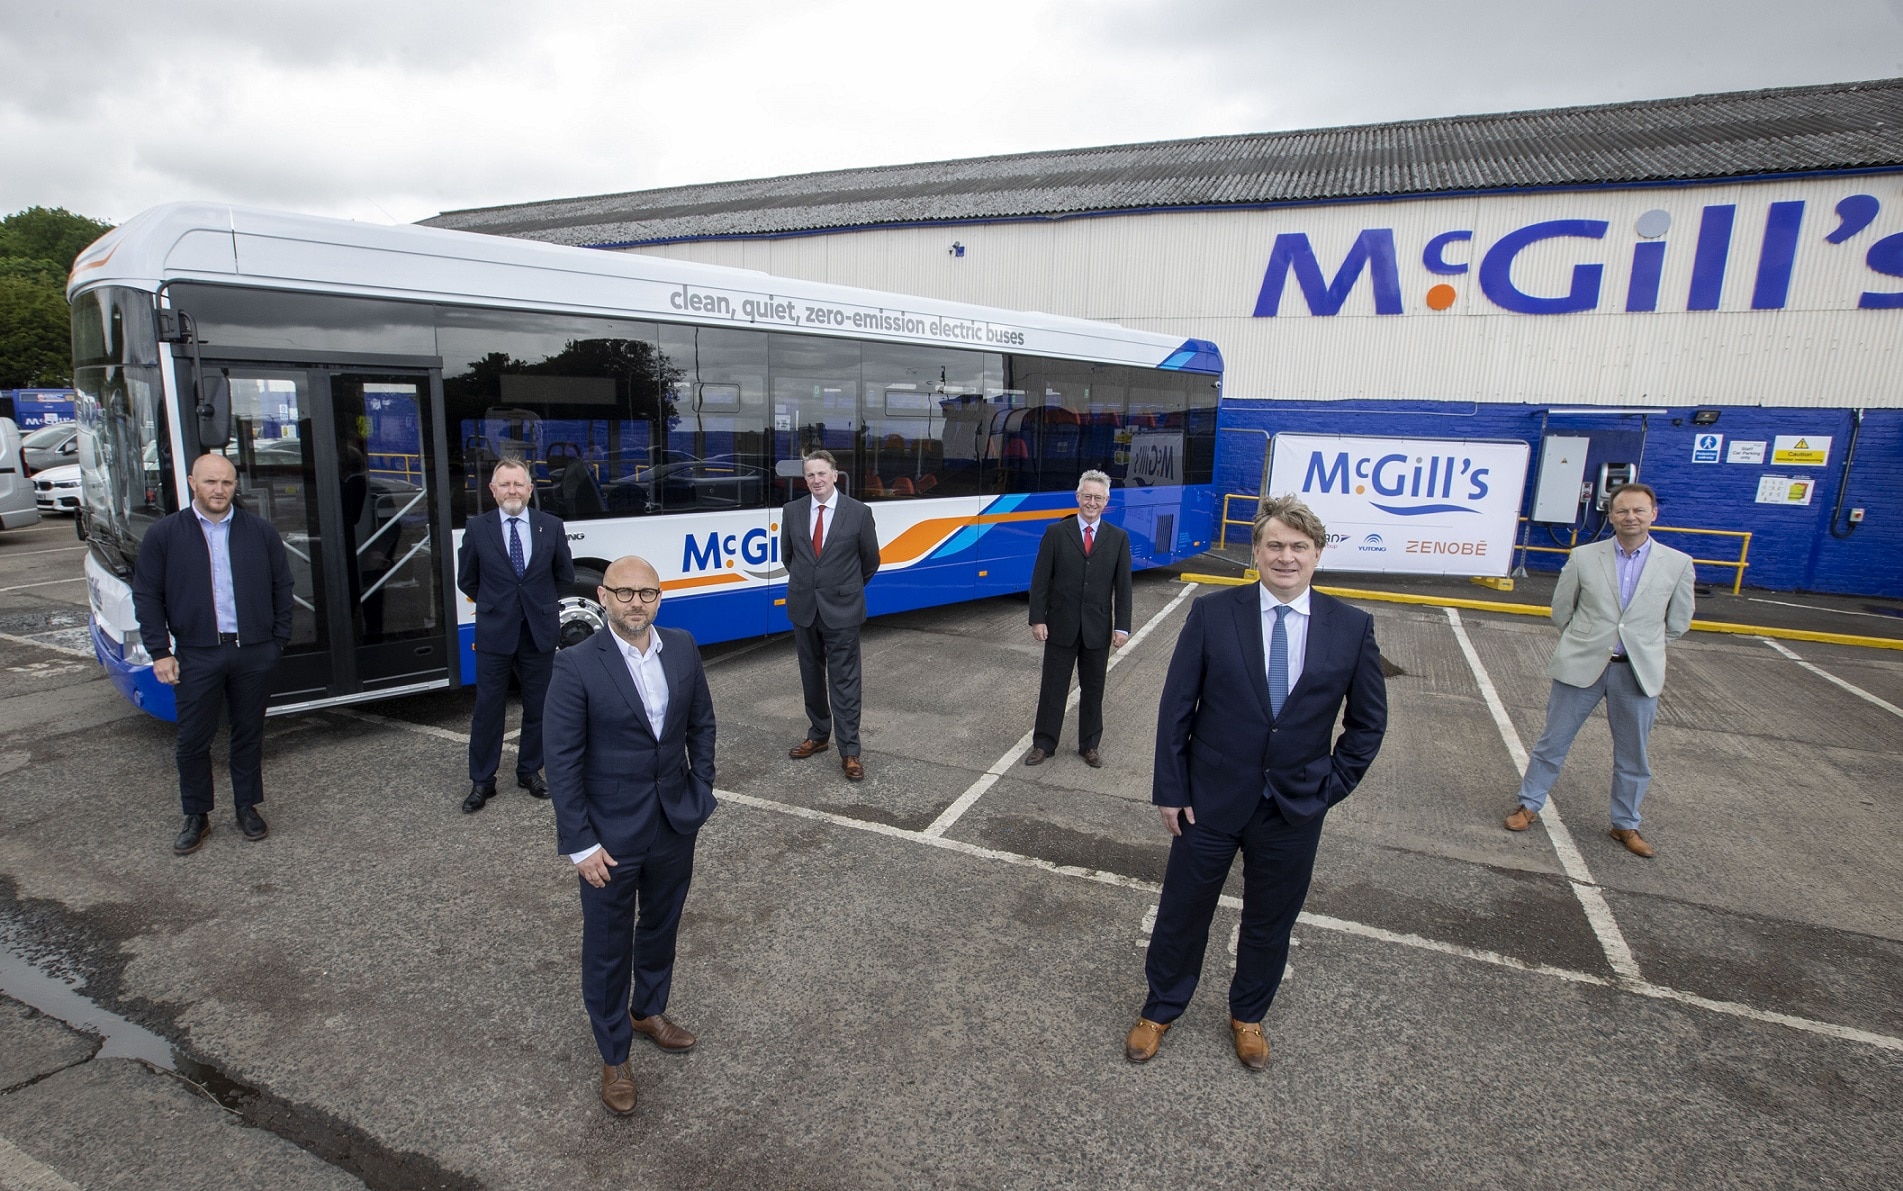 McGills Buses electrification work underway